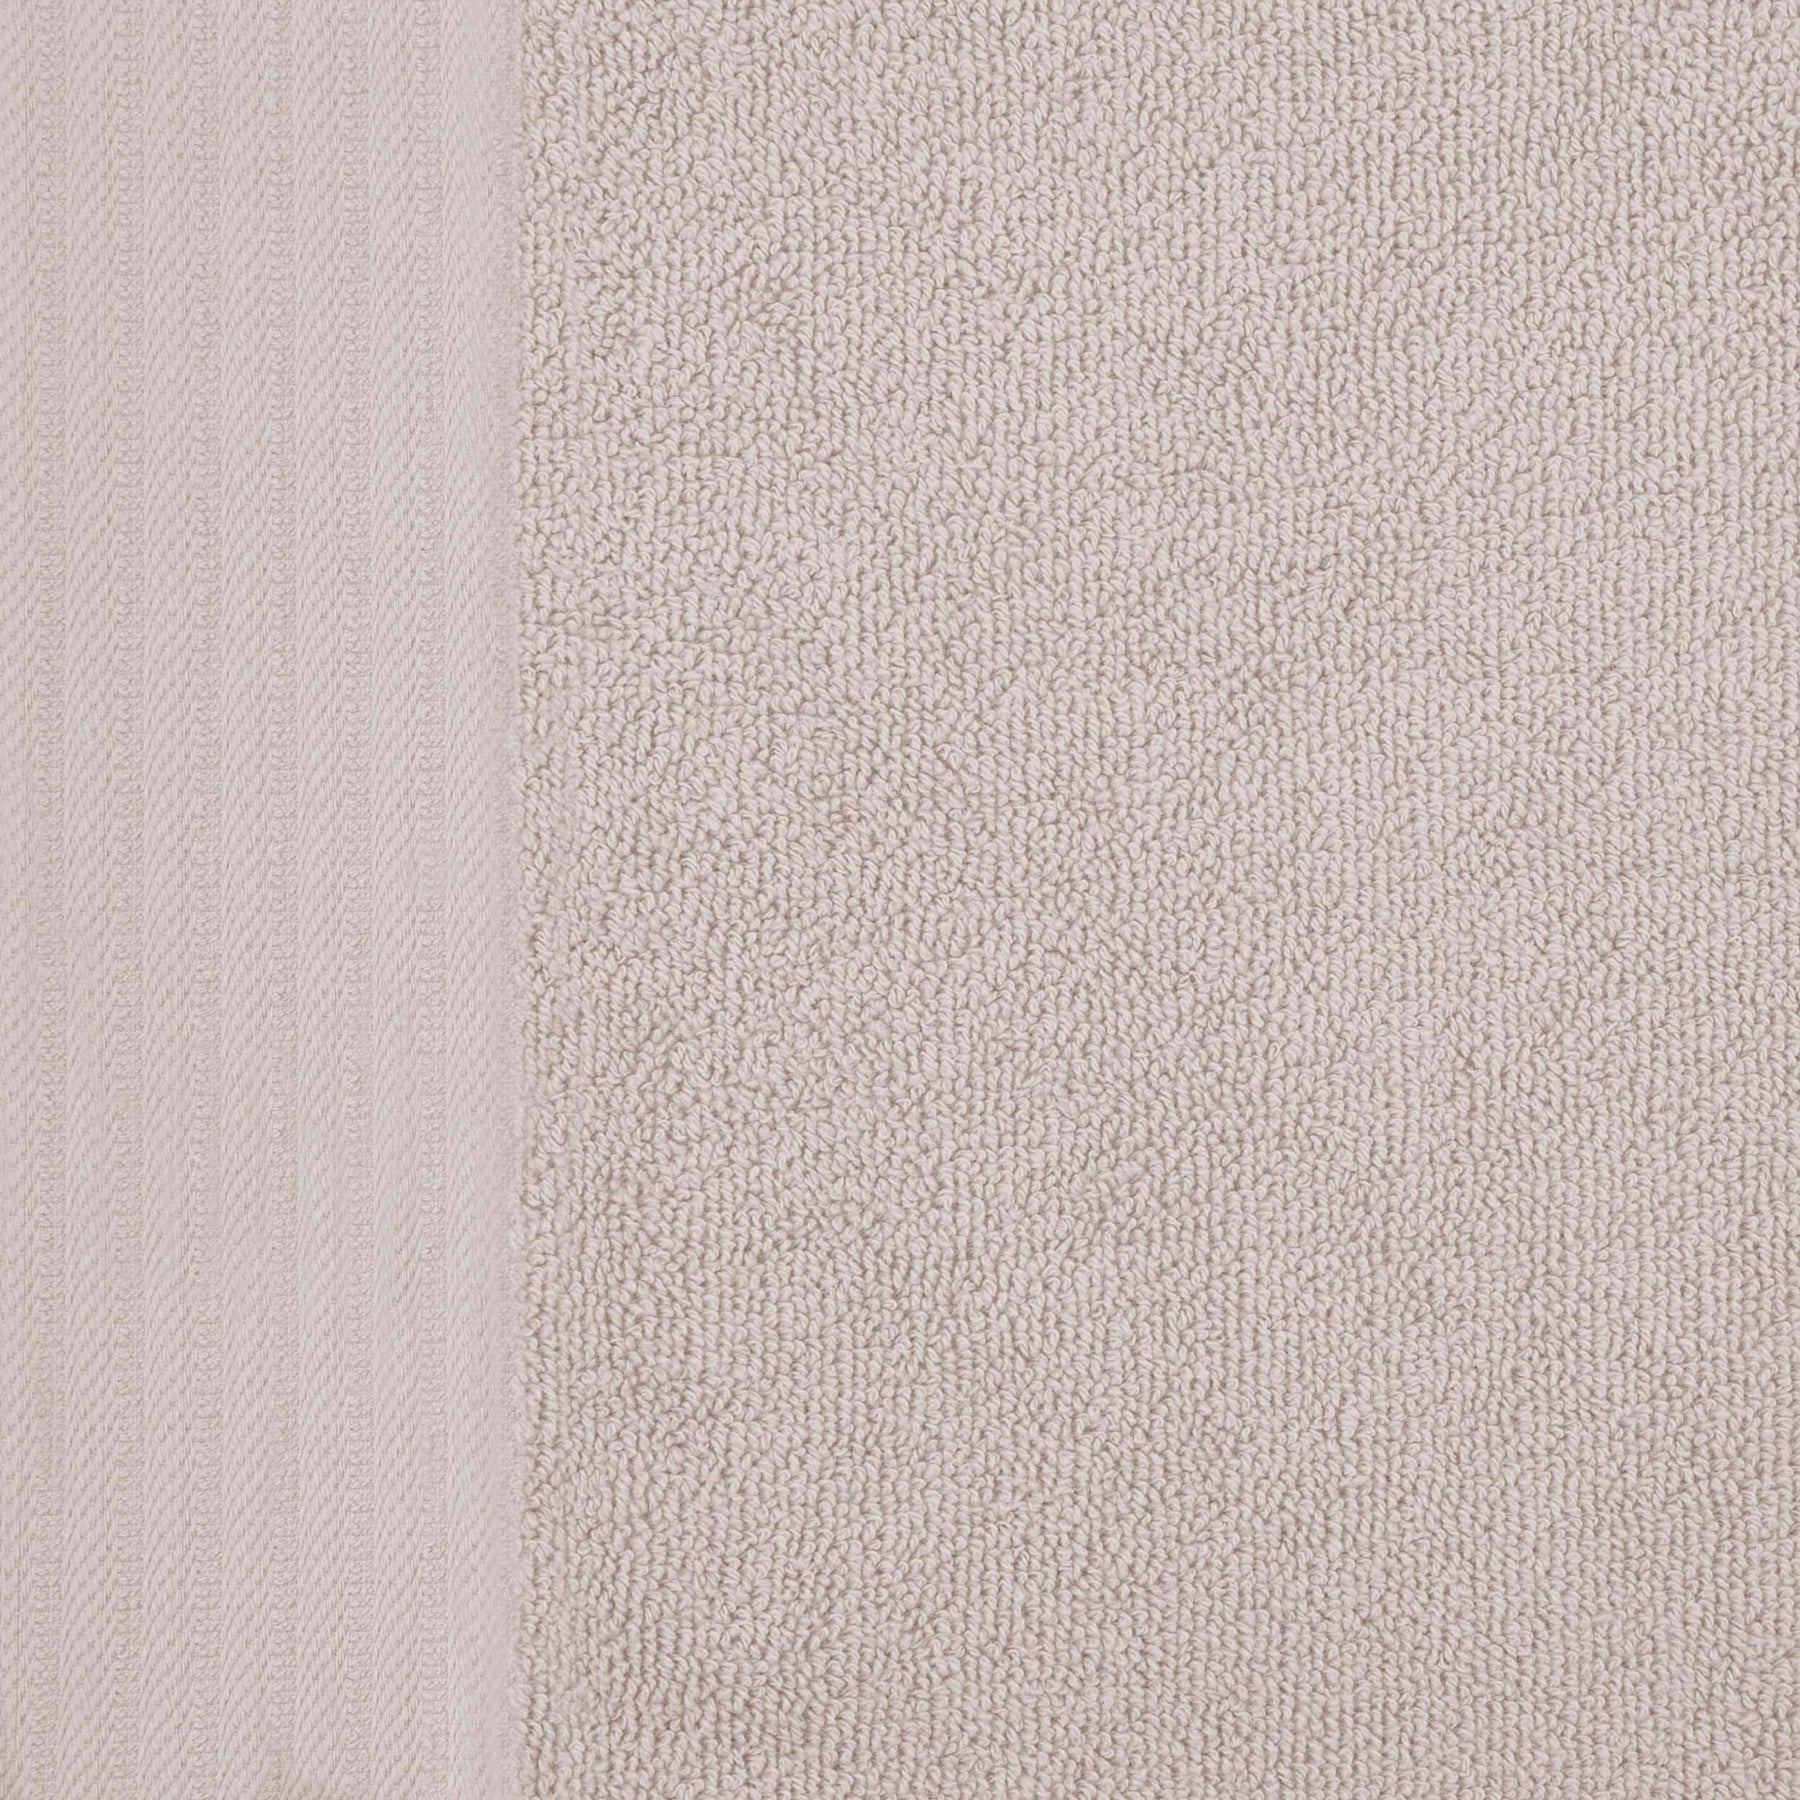 Premium Turkish Cotton Jacquard Herringbone and Solid 6-Piece Hand Towel Set - Ivory